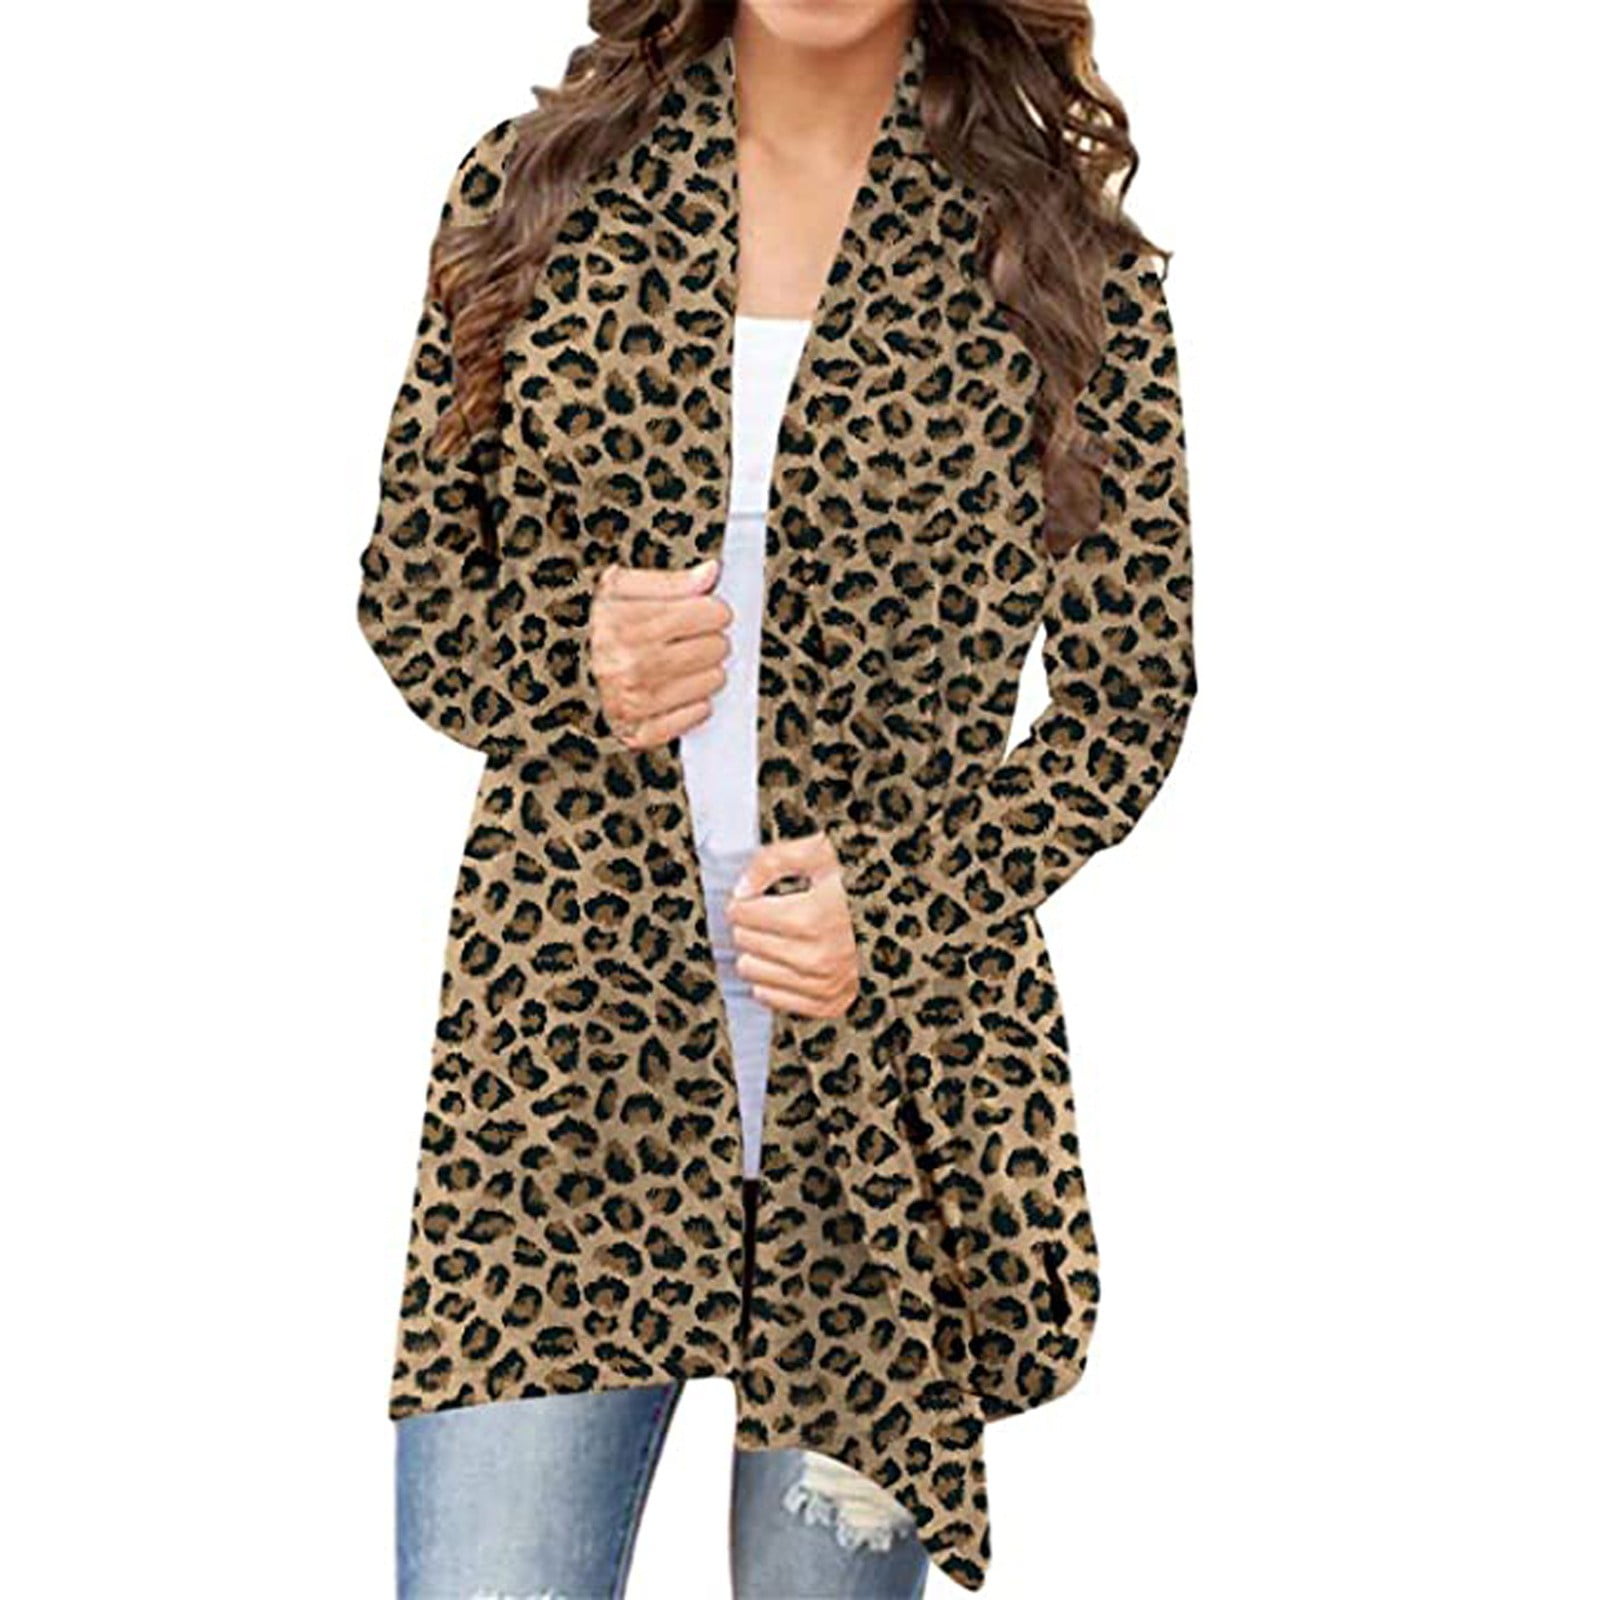 Women Long Cardigan Camouflage Long Sleeve Coat Leisure Leopard Print Outerwear Coat 